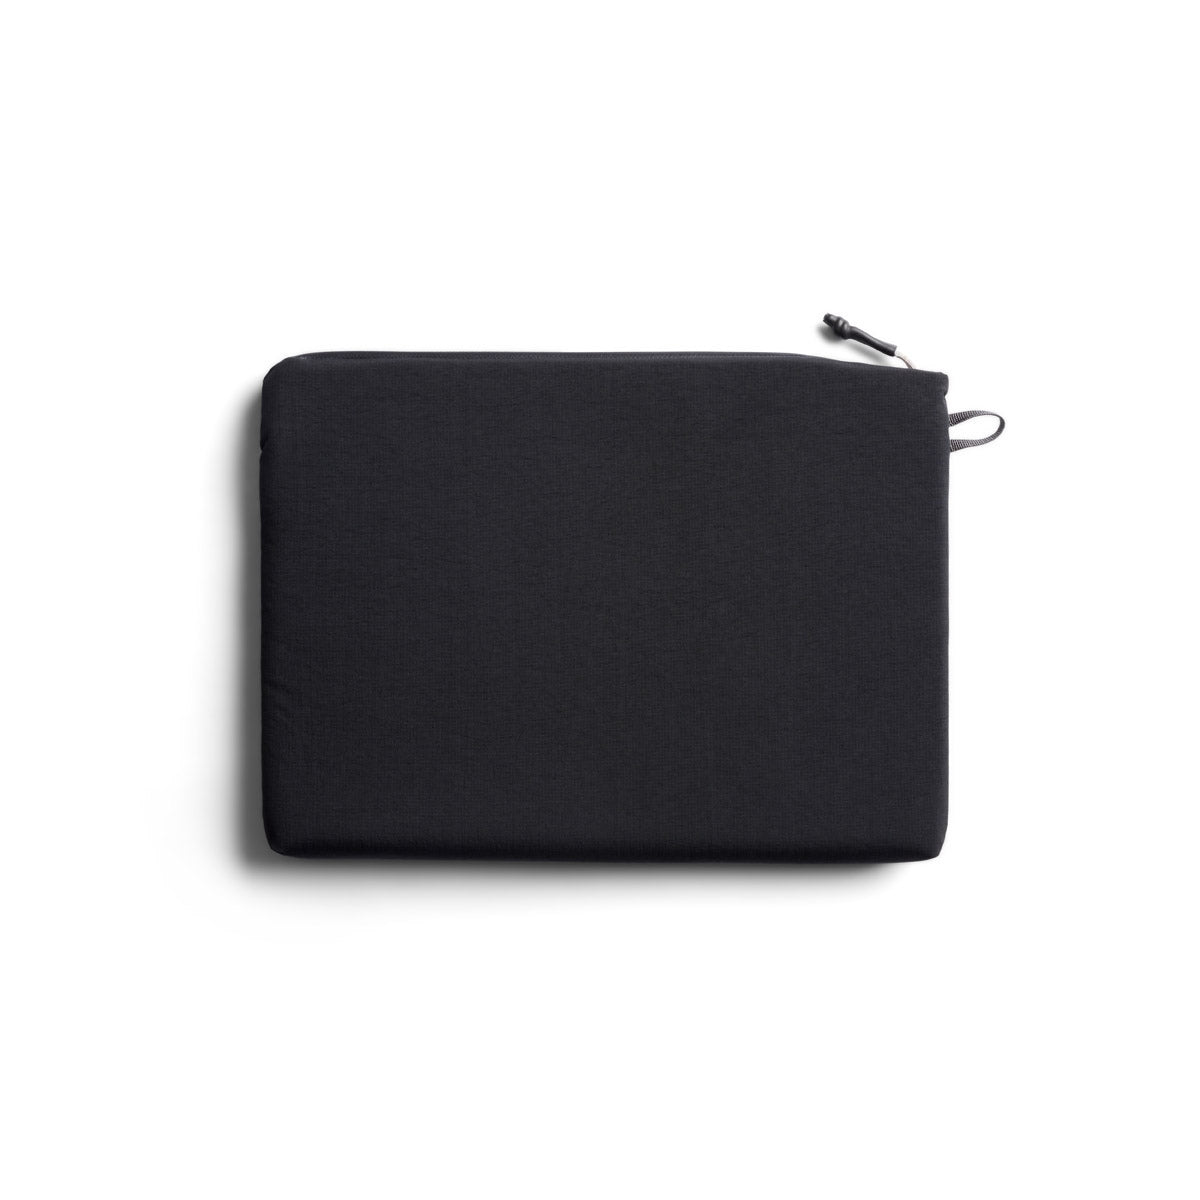 Bellroy Lite Laptop Sleeve 16&quot; in Black